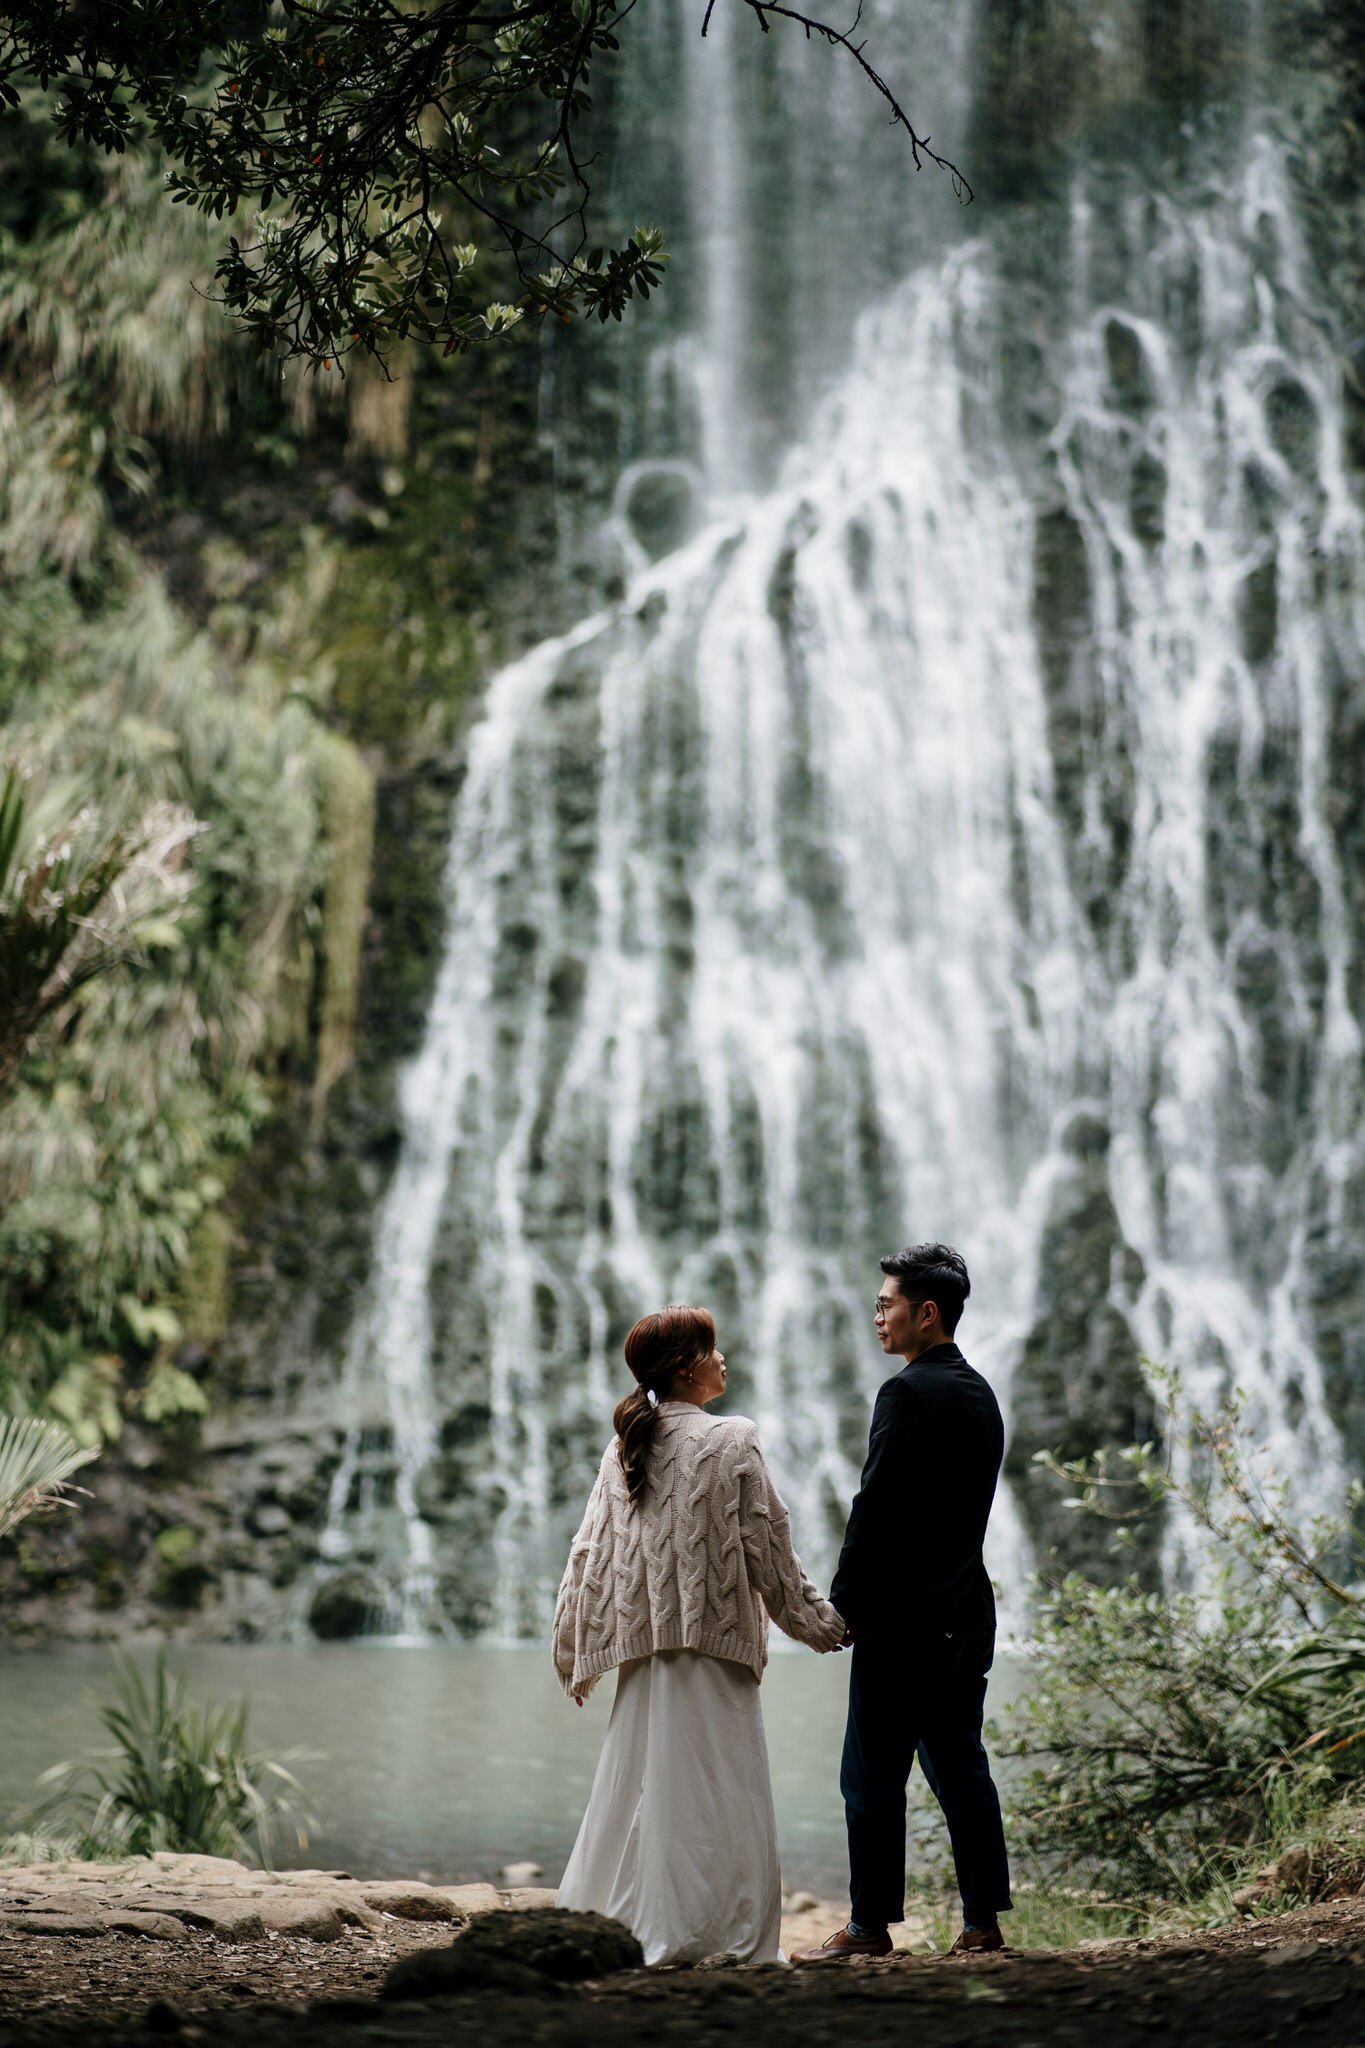 auckland-wedding-photographer-videographer-story-by-koo-koo's-jewelry-dear-white-productions-pre-wedding-engagement-photo-kare-karekare-falls-waterfall-beach-west-piha-muriwai-rain-night (6).JPG